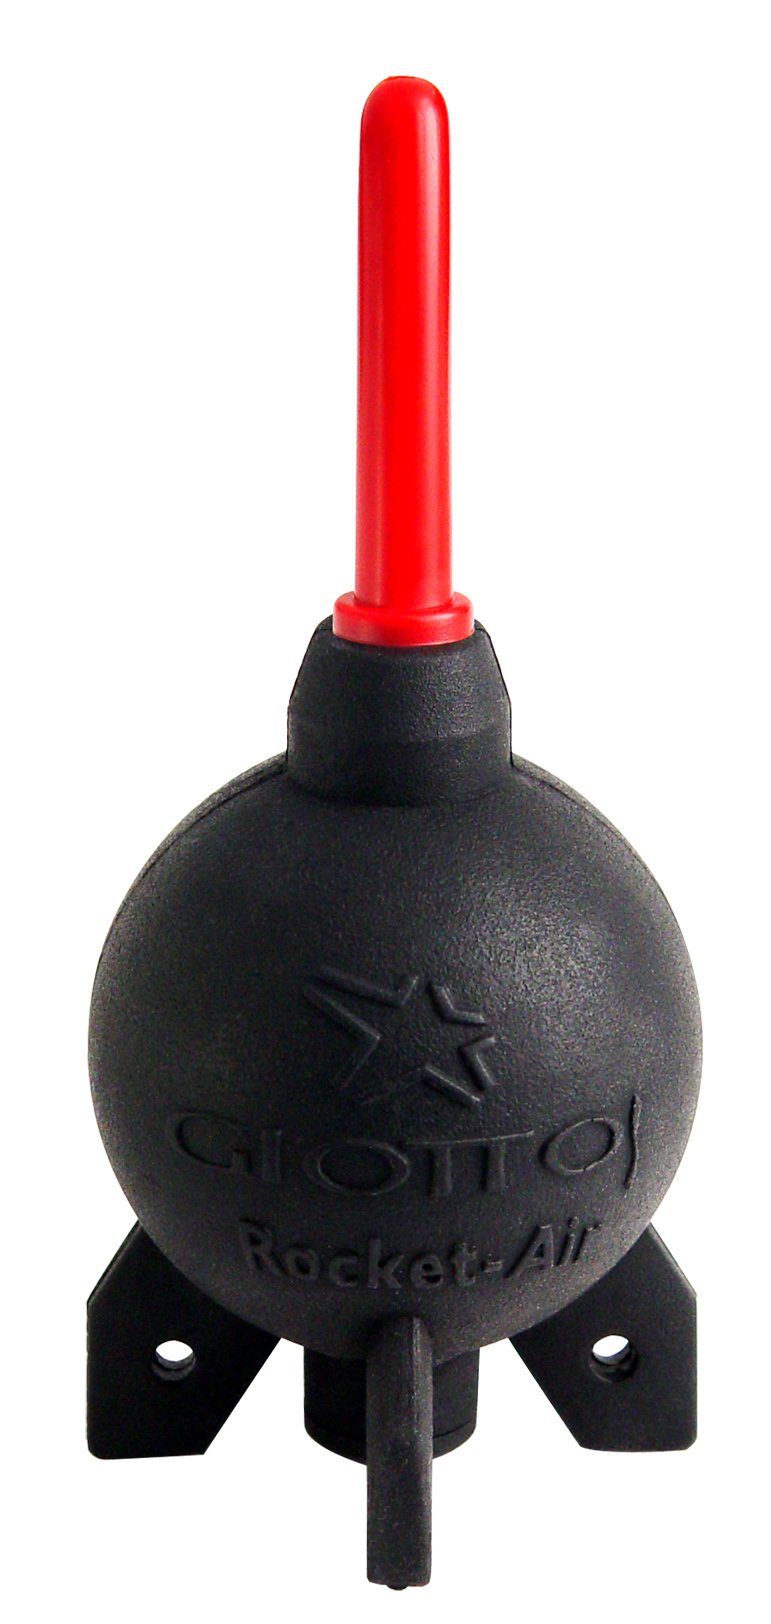 Giottos AA1920 Rocket Air Blaster Small-Black